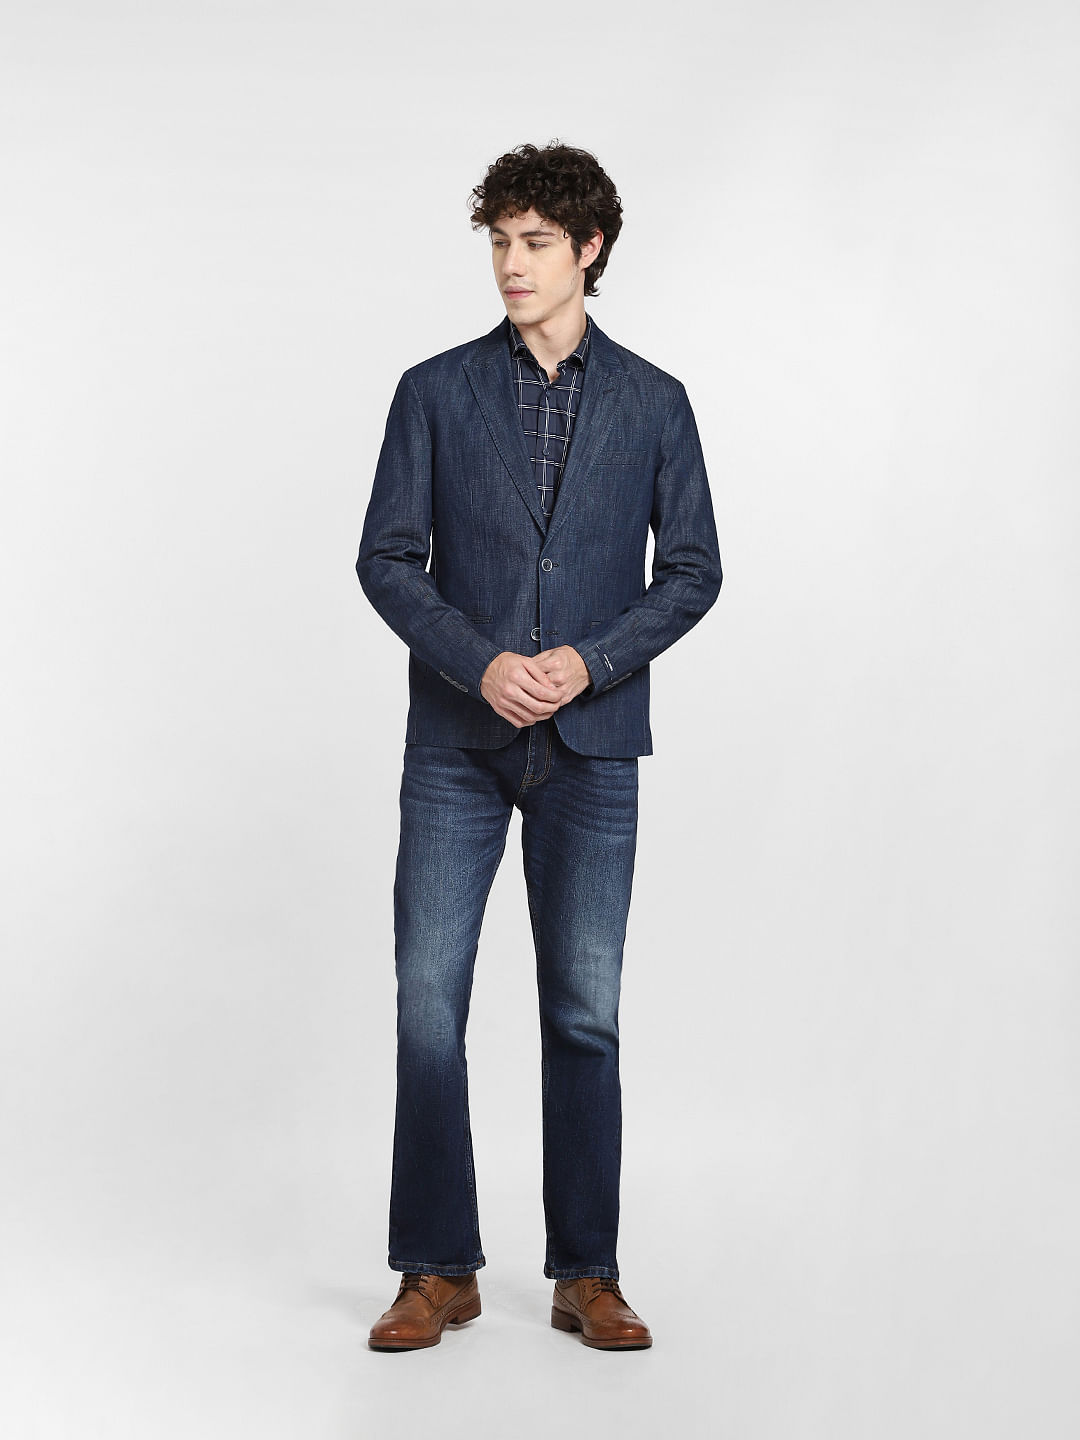 YMI | Jackets & Coats | Half Cut Denim Jacket Size Med Ymi Brand | Poshmark